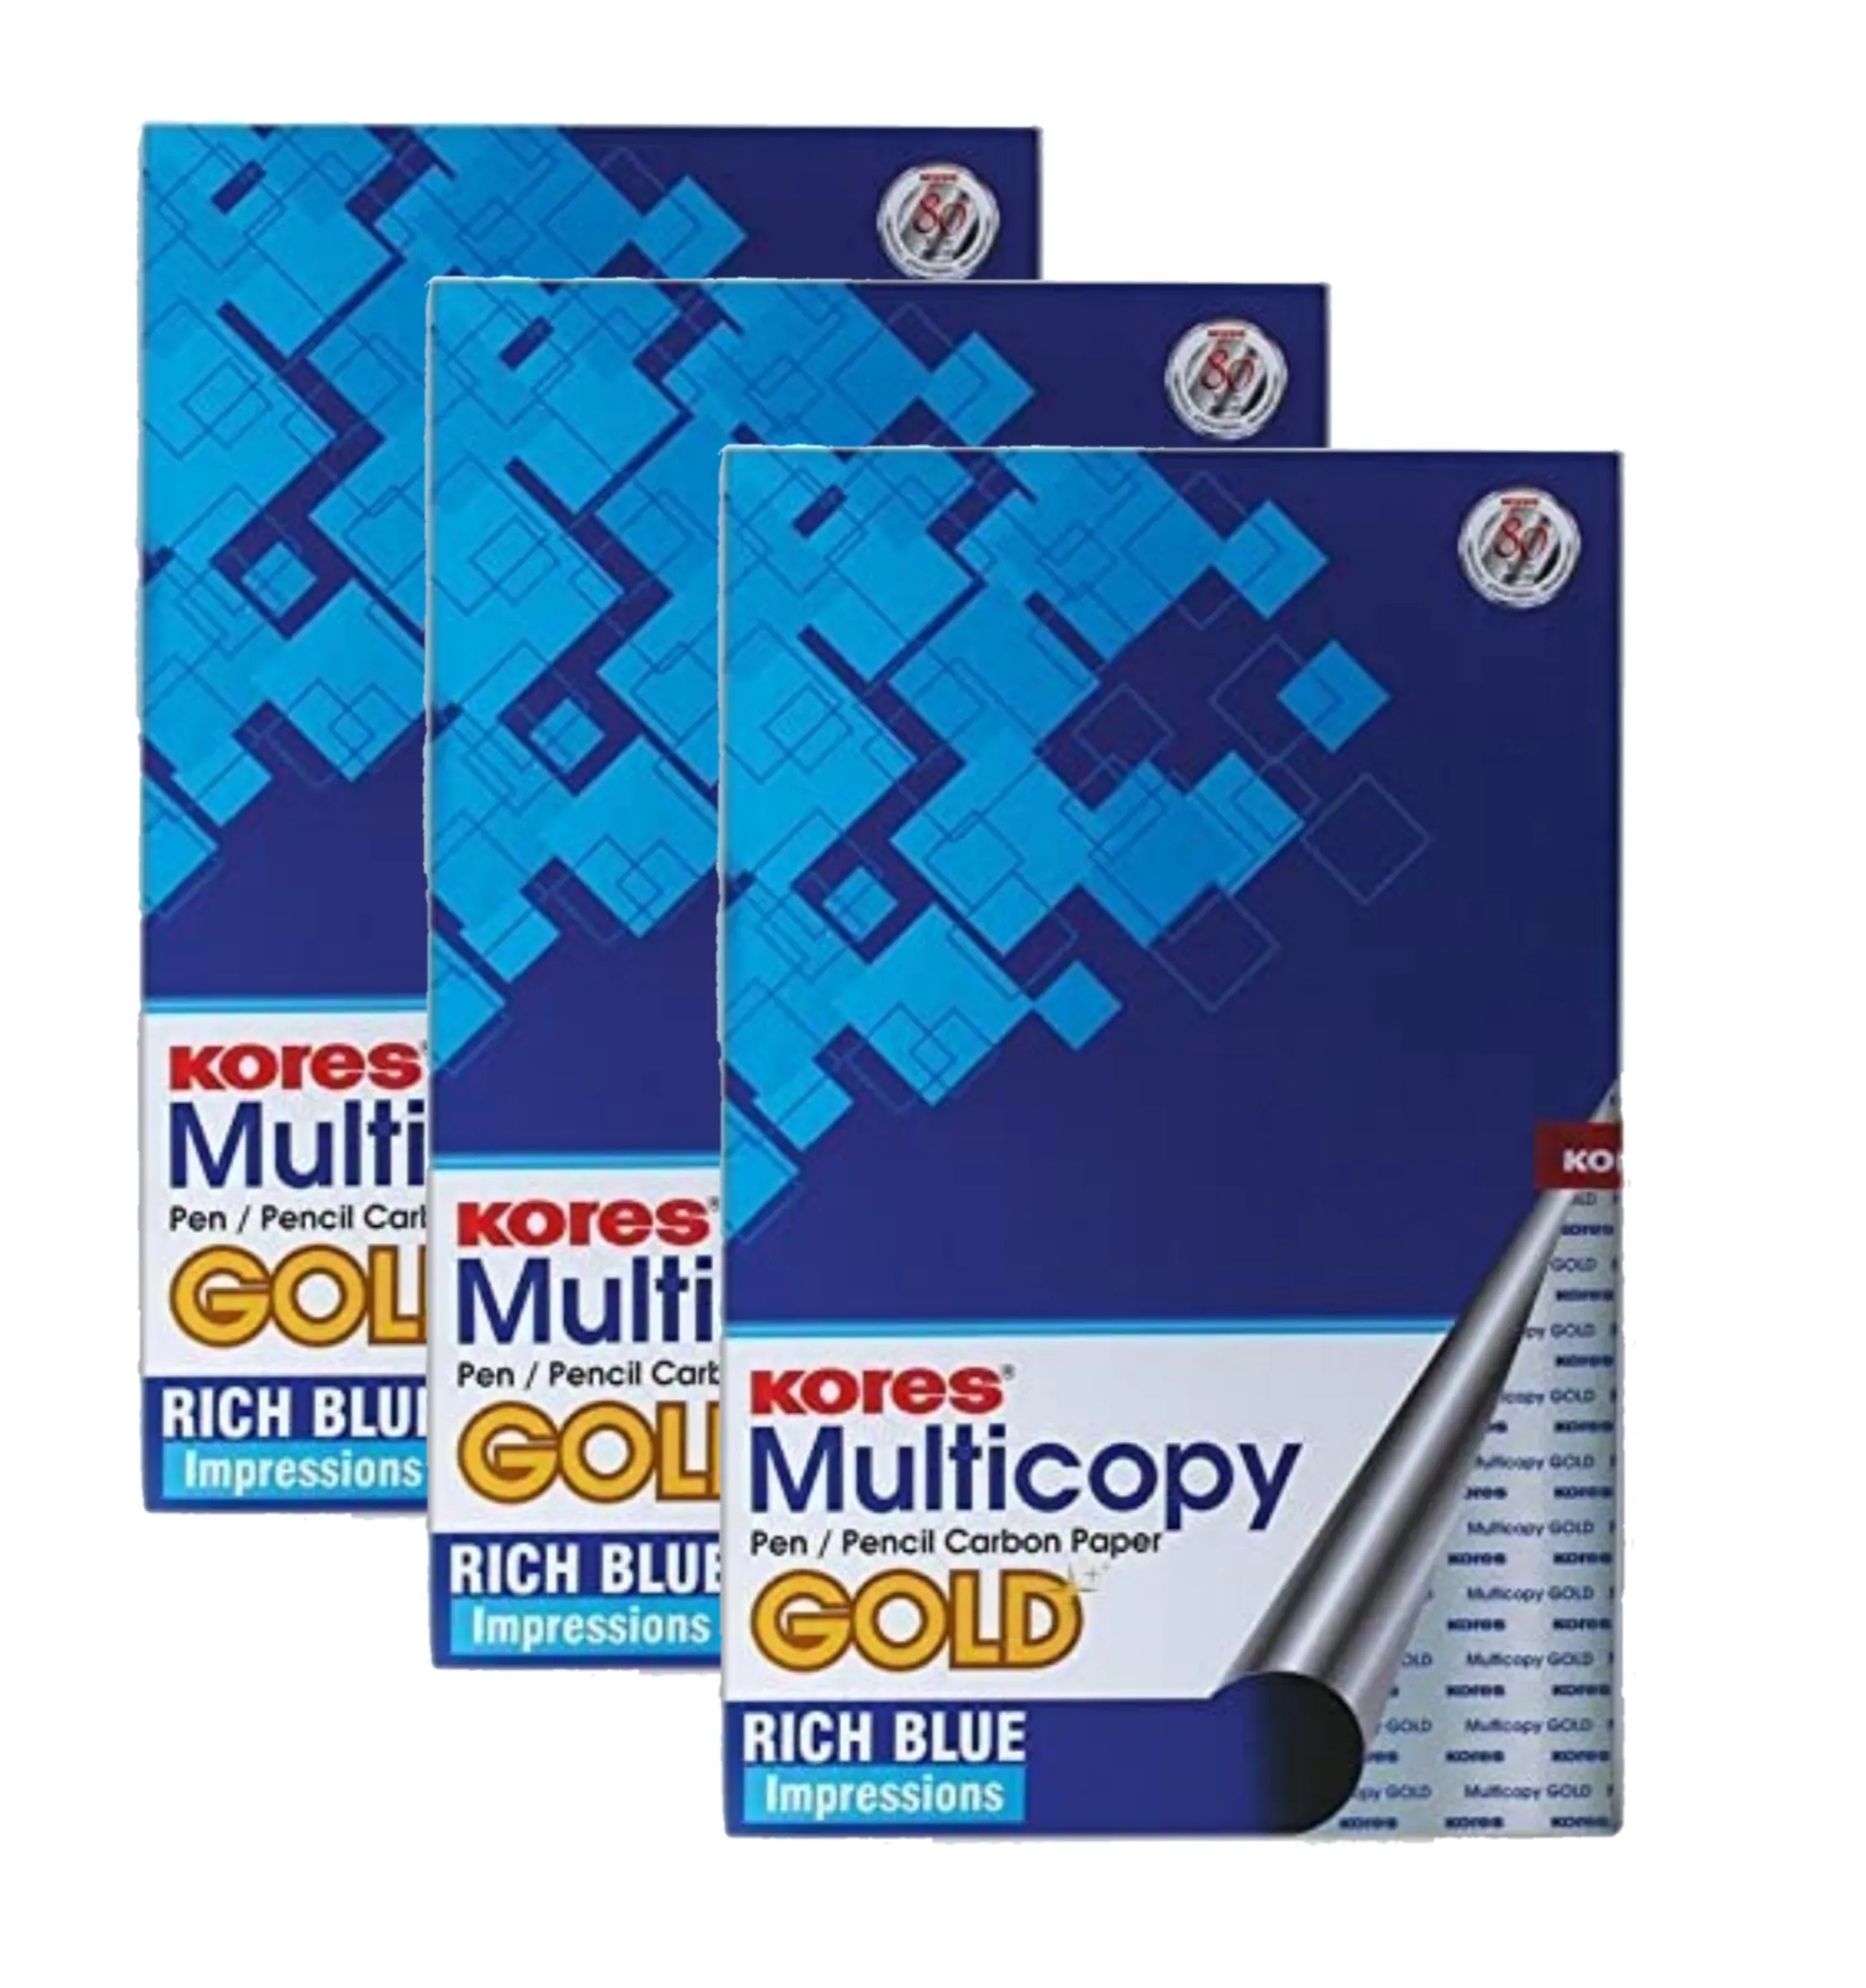 Kores Multicopy Pen/ Pencil Carbon Paper, Gold Rich Blue Impression 100 Sheet inside Pack, (Pack of 3)